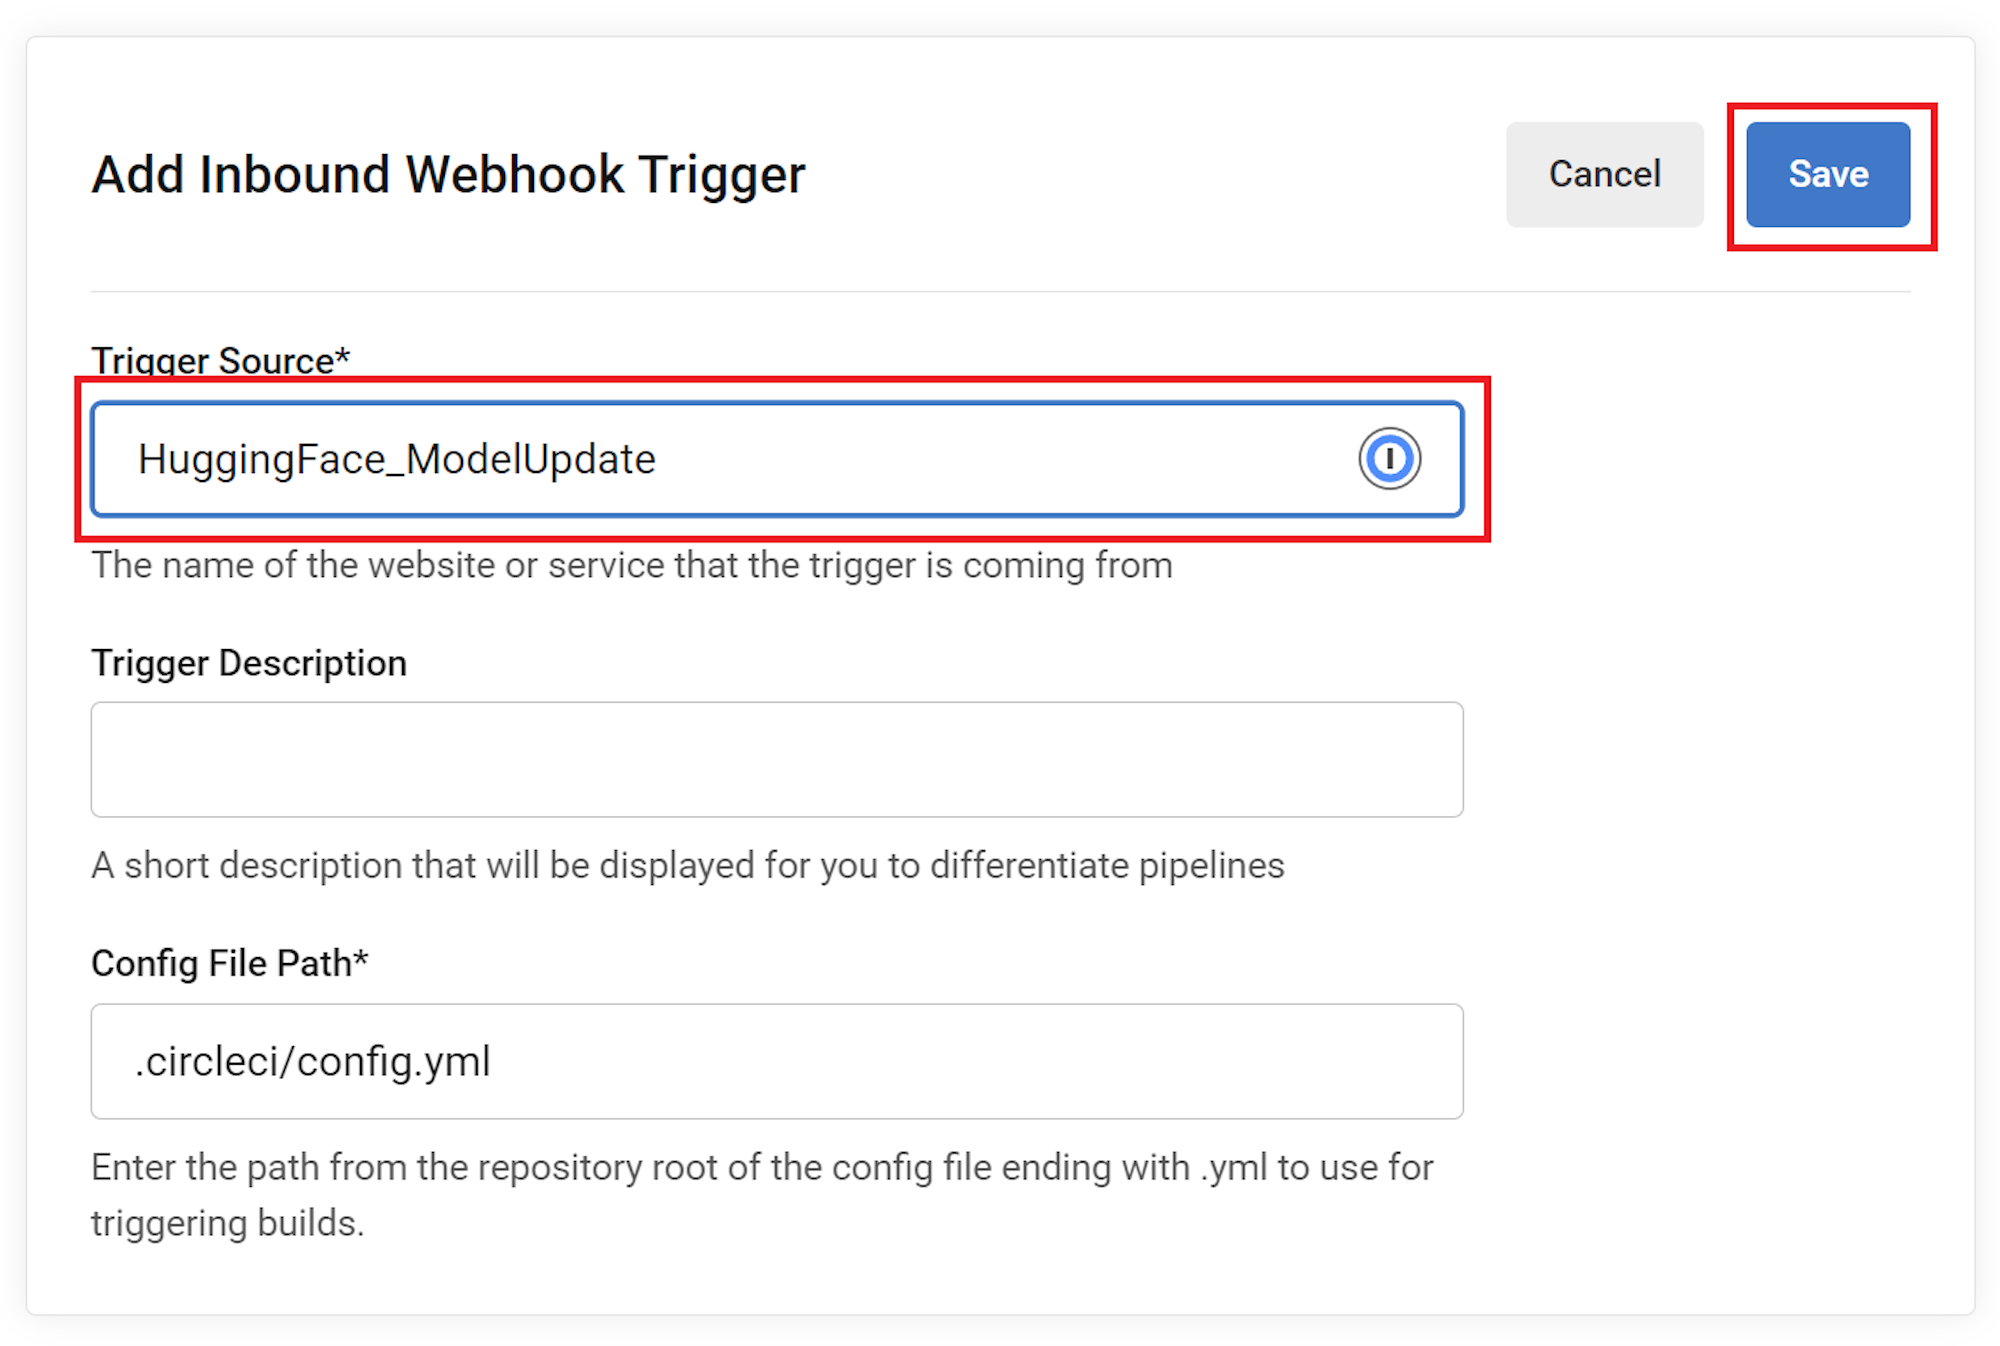 CircleCI: Add Inbound Webhook Trigger - Trigger Source